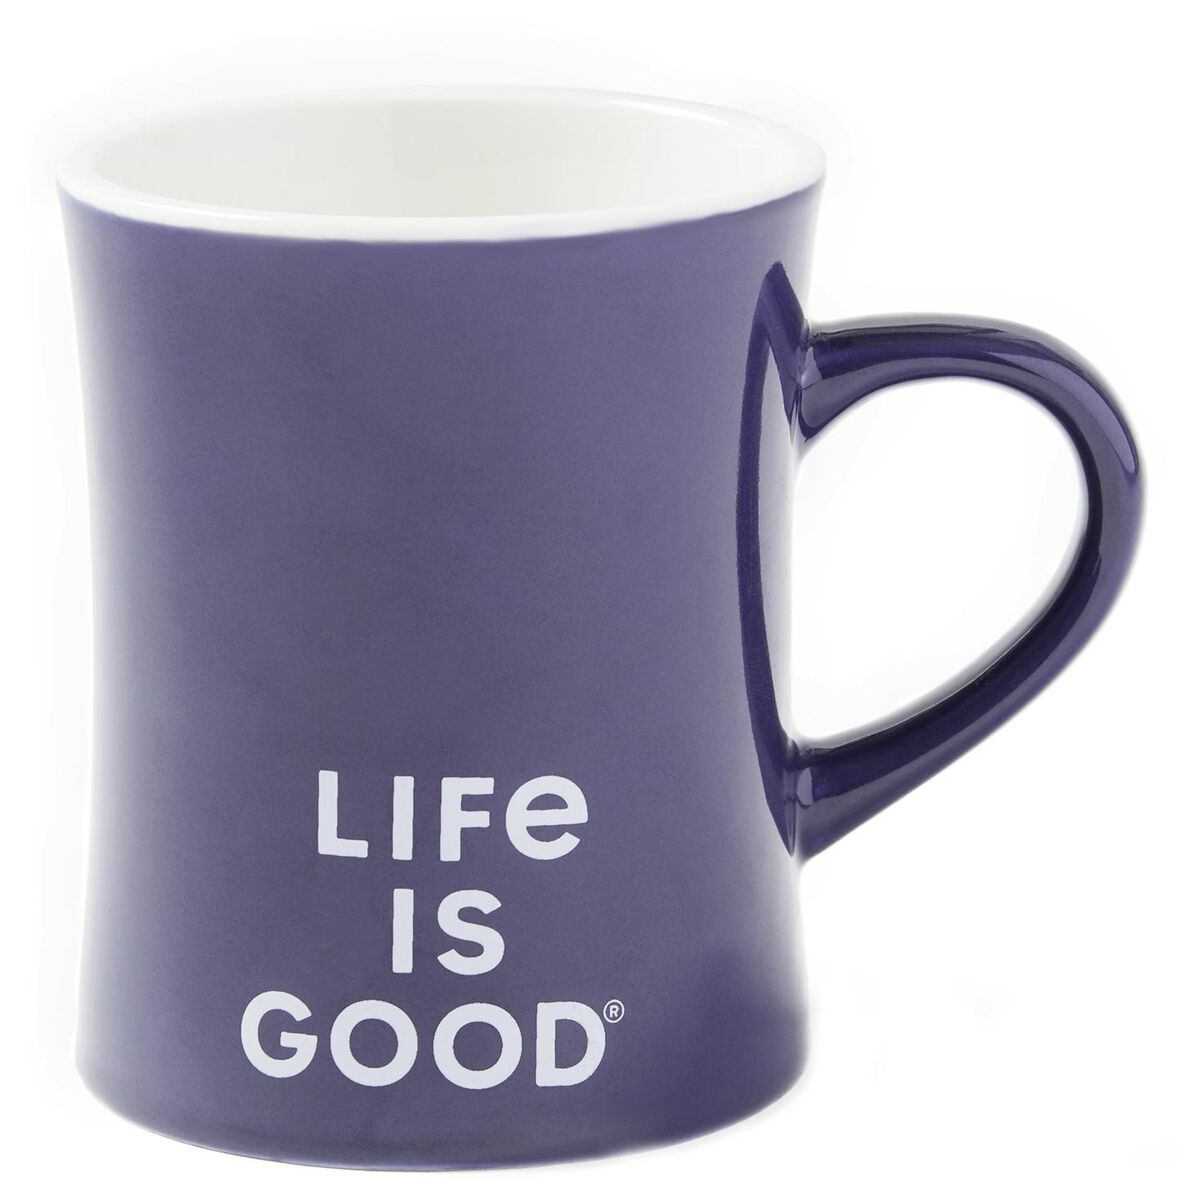 Life is Good Papa Bear Mug, 16 oz. - Mugs & Teacups - Hallmark